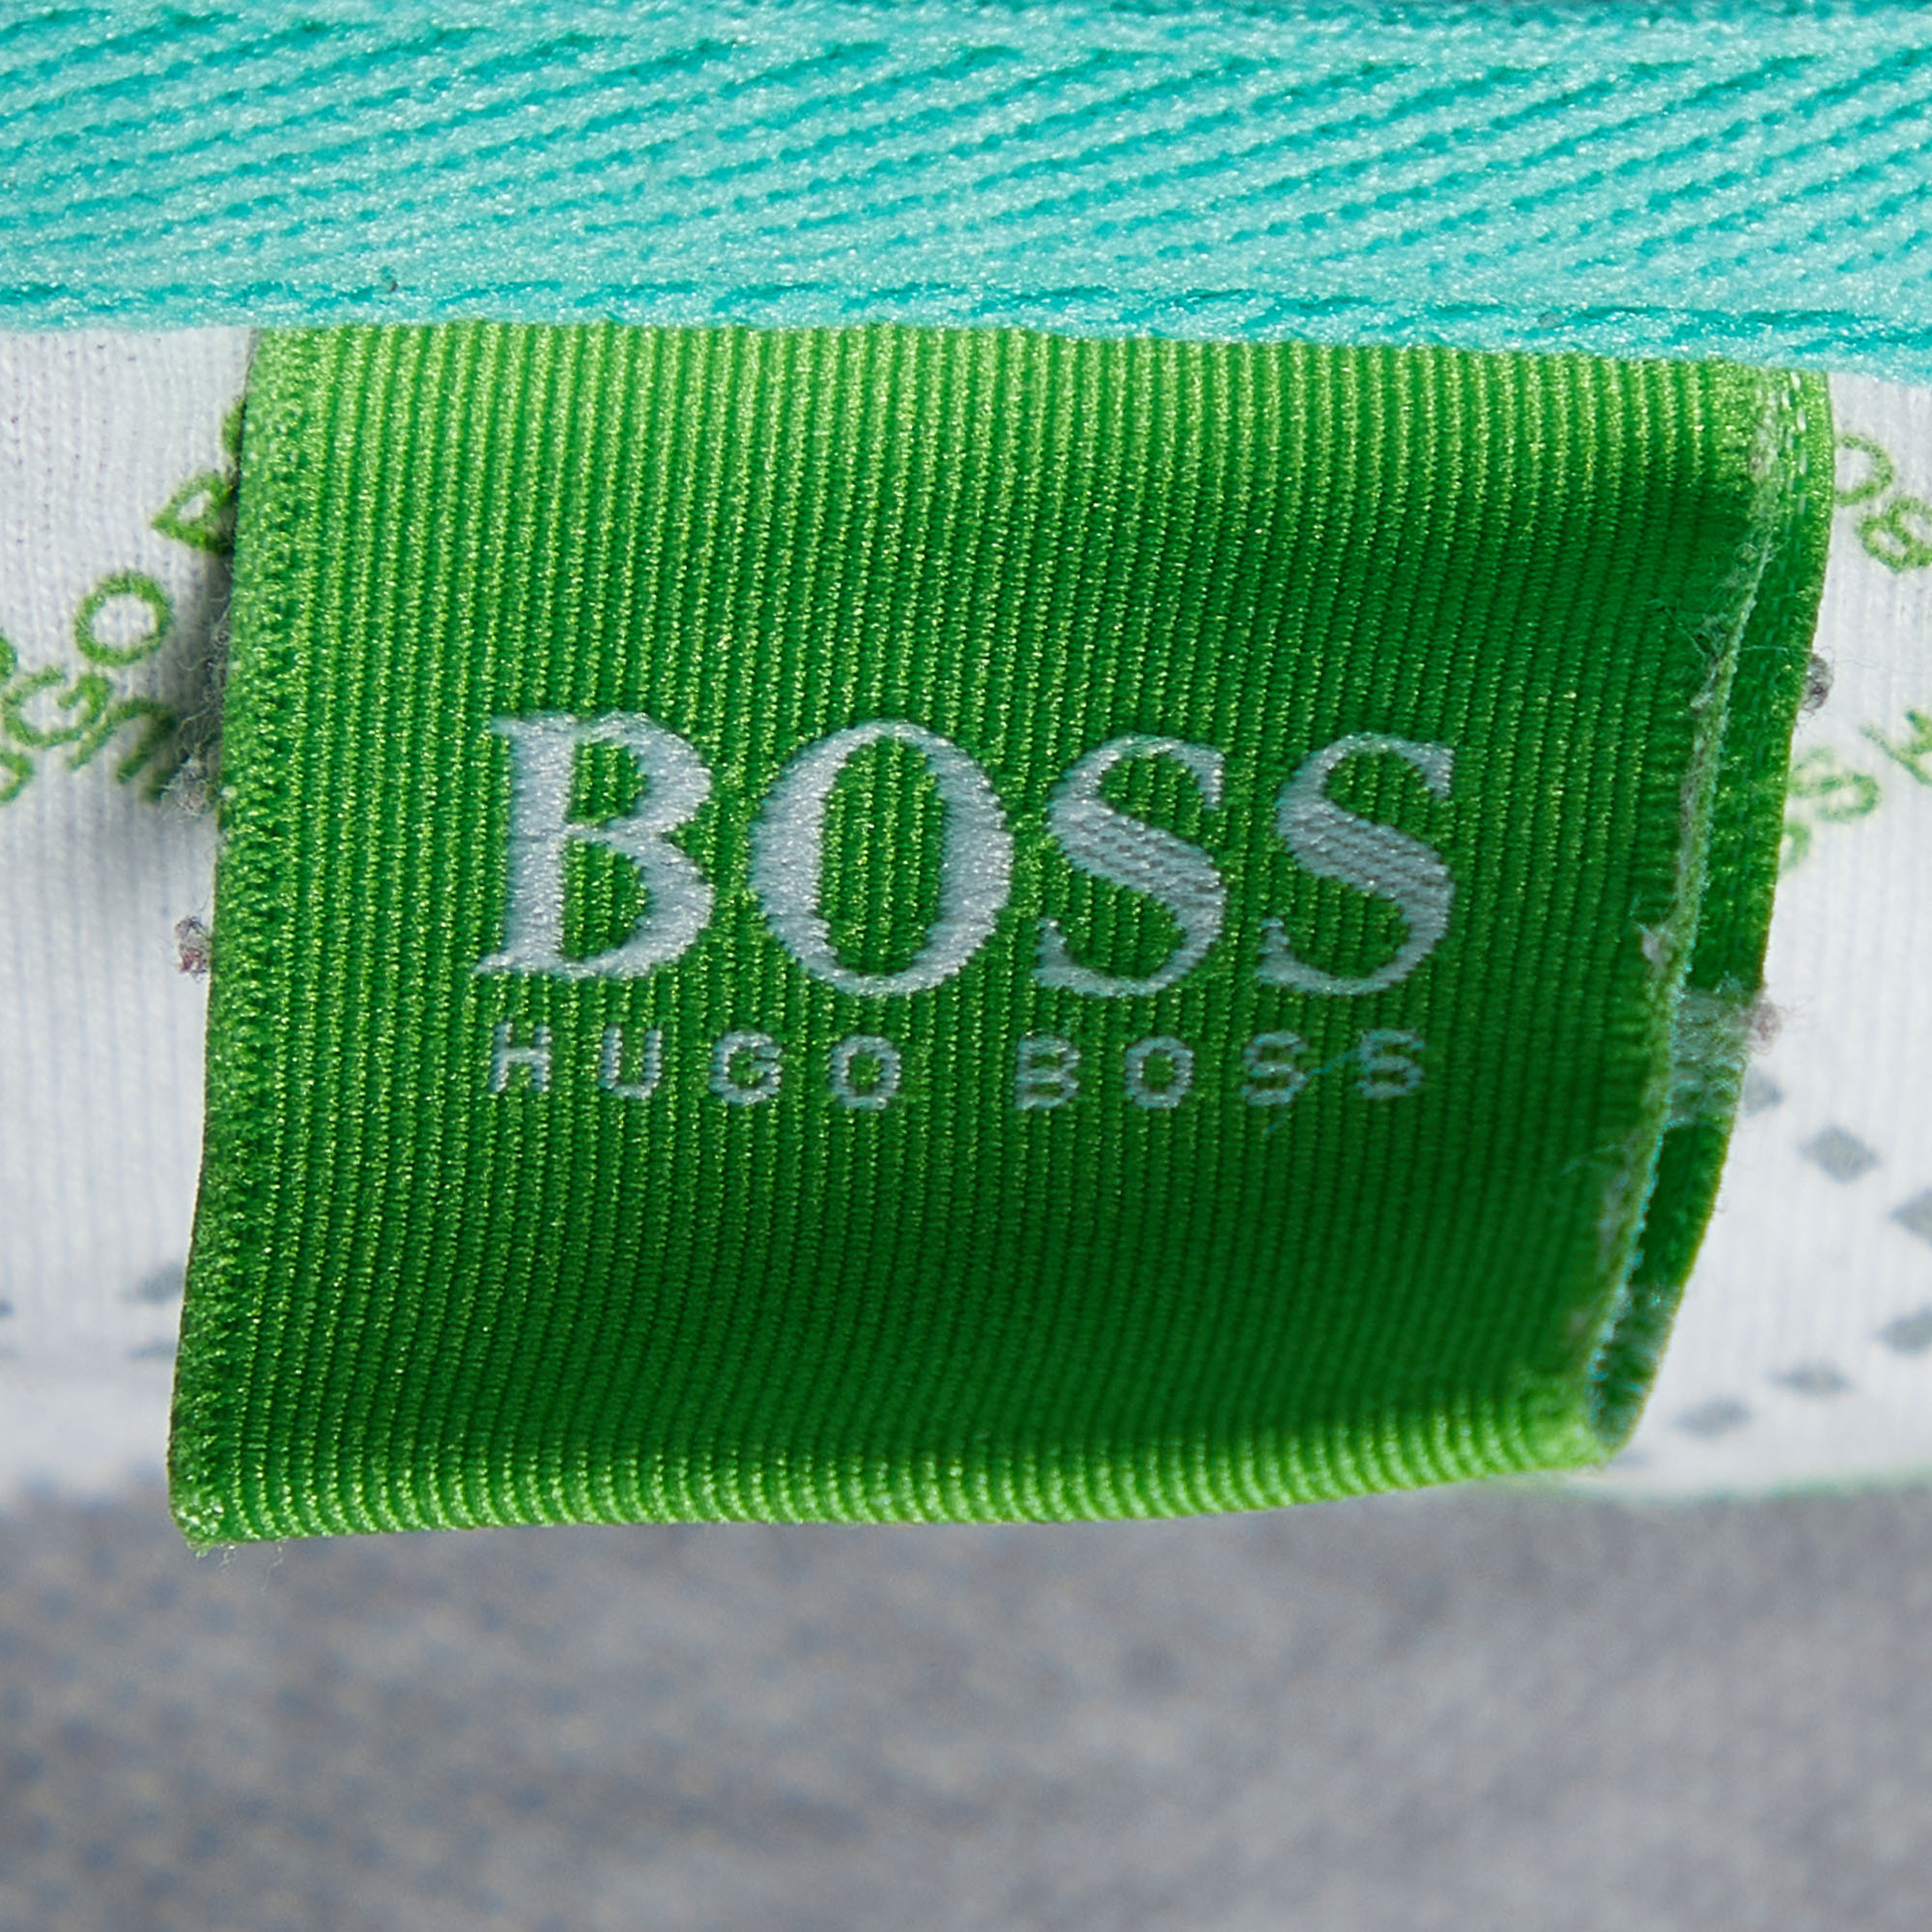 Boss By Hugo Boss Grey  & White Cotton Striped Polo T Shirt XL